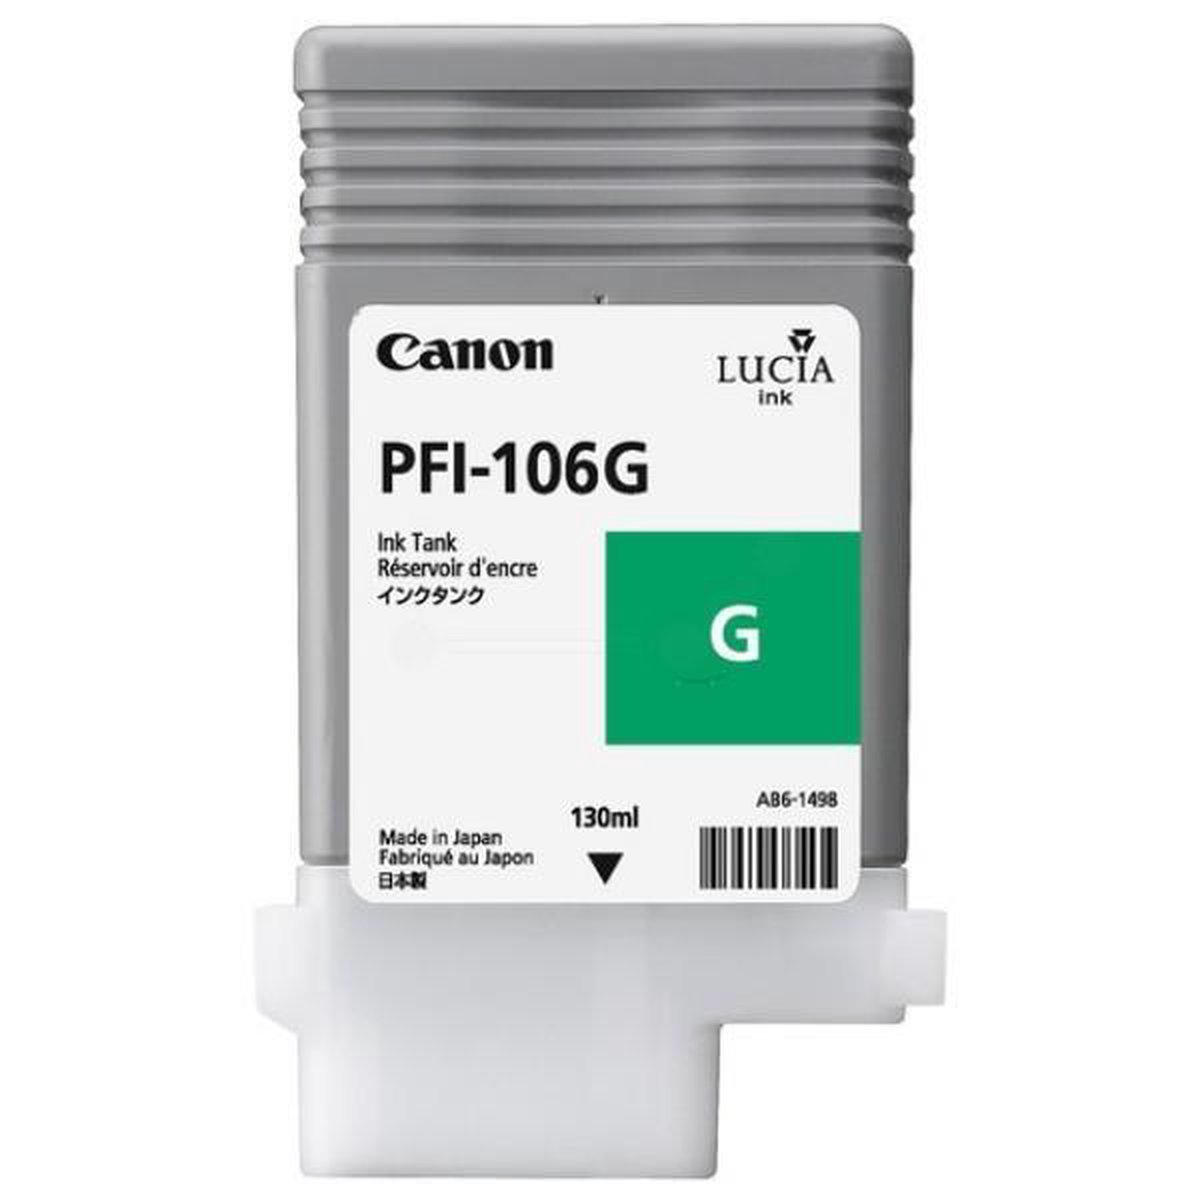 CANON PFI-106G inktcartridge groen standard capacity 130 ml 1-pack